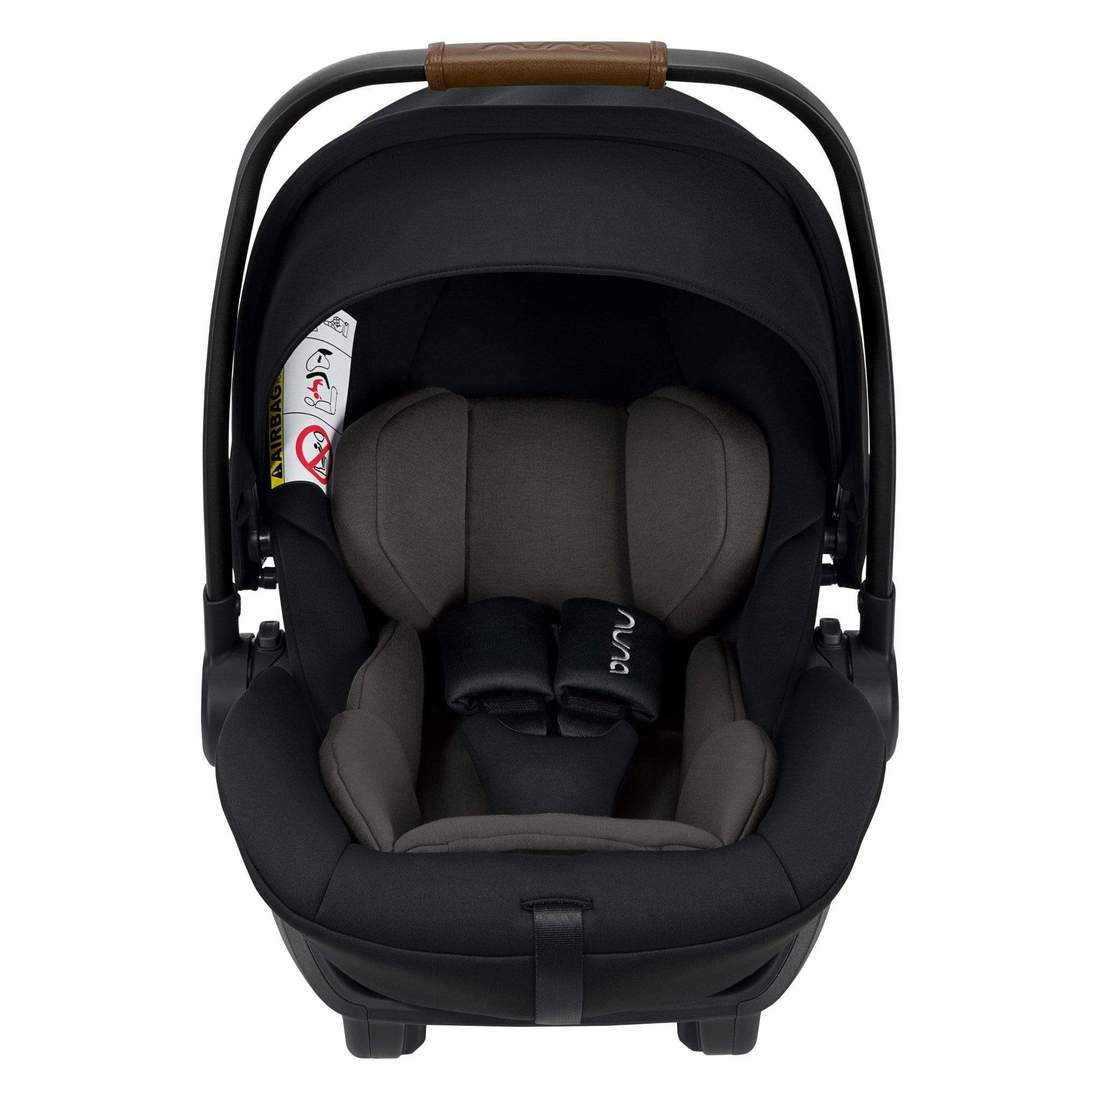 Nuna Arra NEXT i-Size Infant Carrier | Group 0+ car Seat | Newborn | Caviar Black | Direct4baby